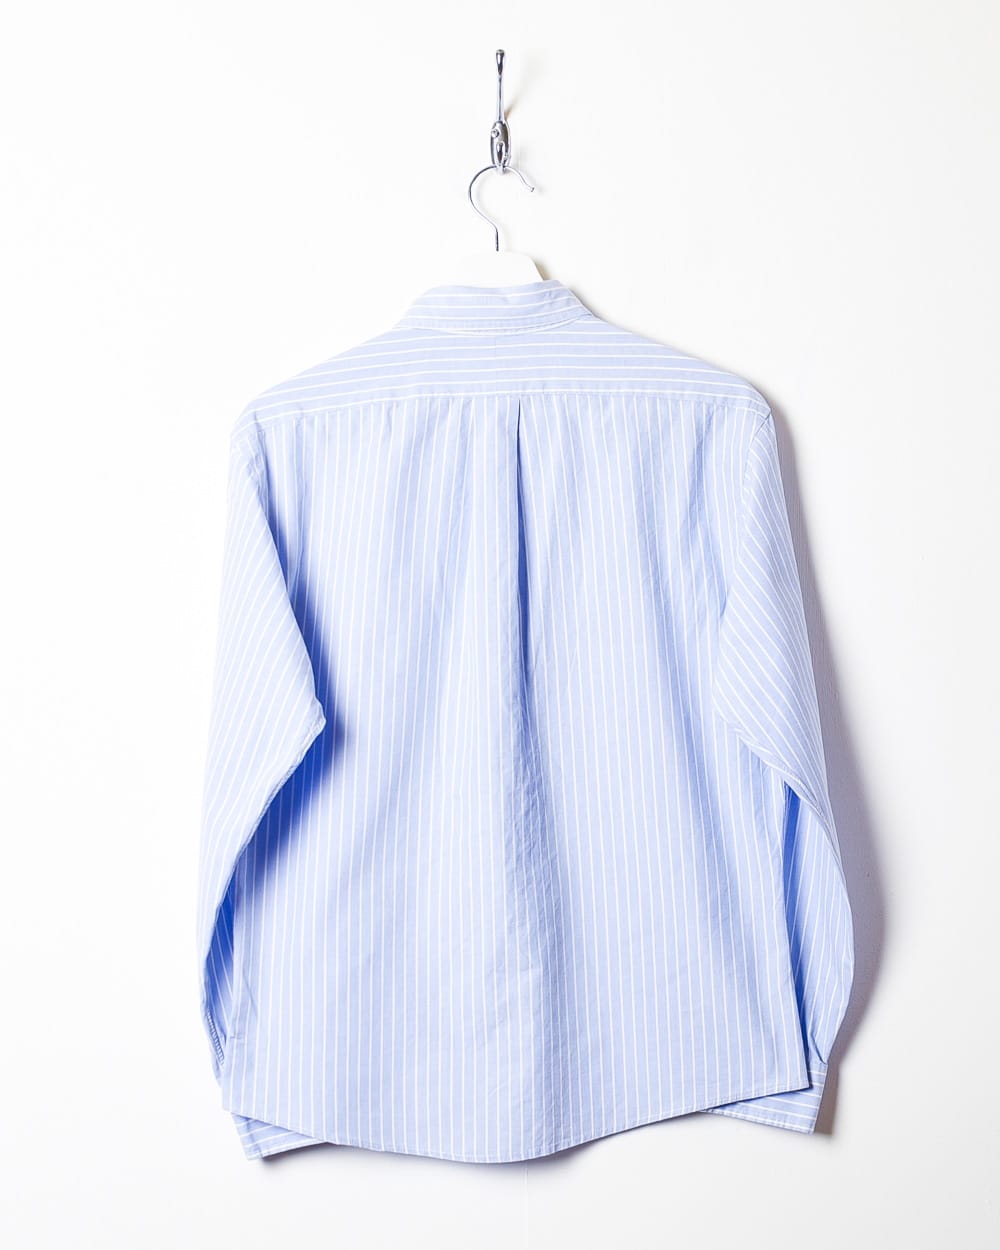 BabyBlue Polo Ralph Lauren Striped Shirt - Small